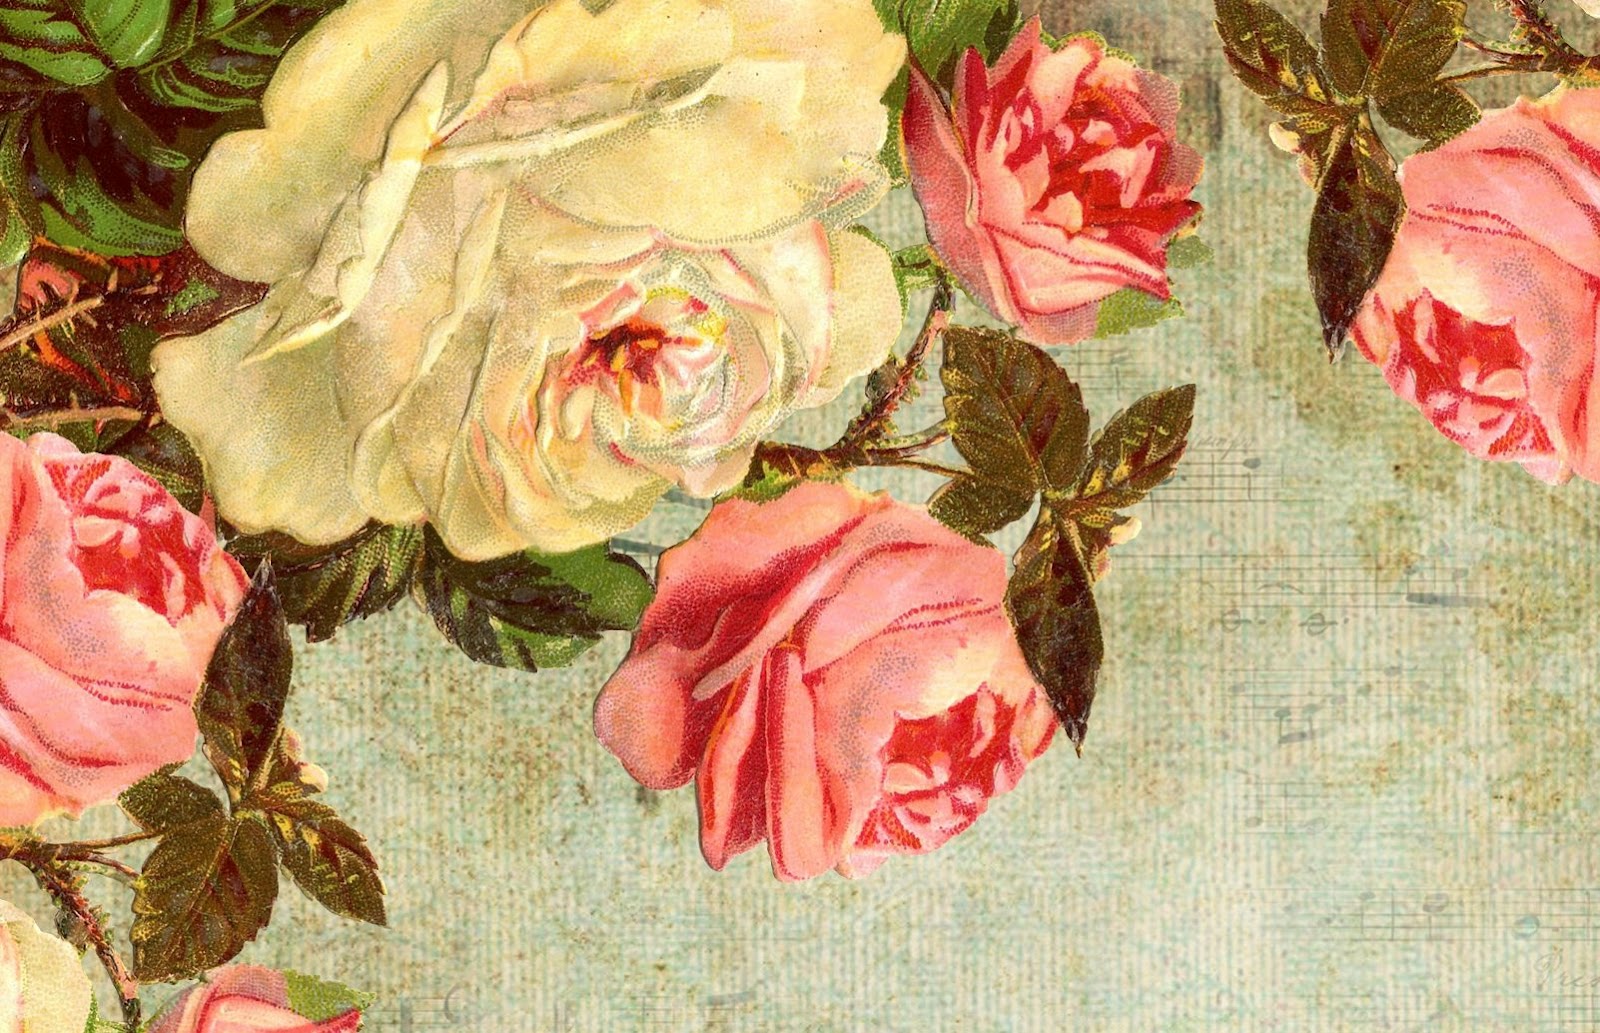 45 Victorian Rose Wallpaper On Wallpapersafari